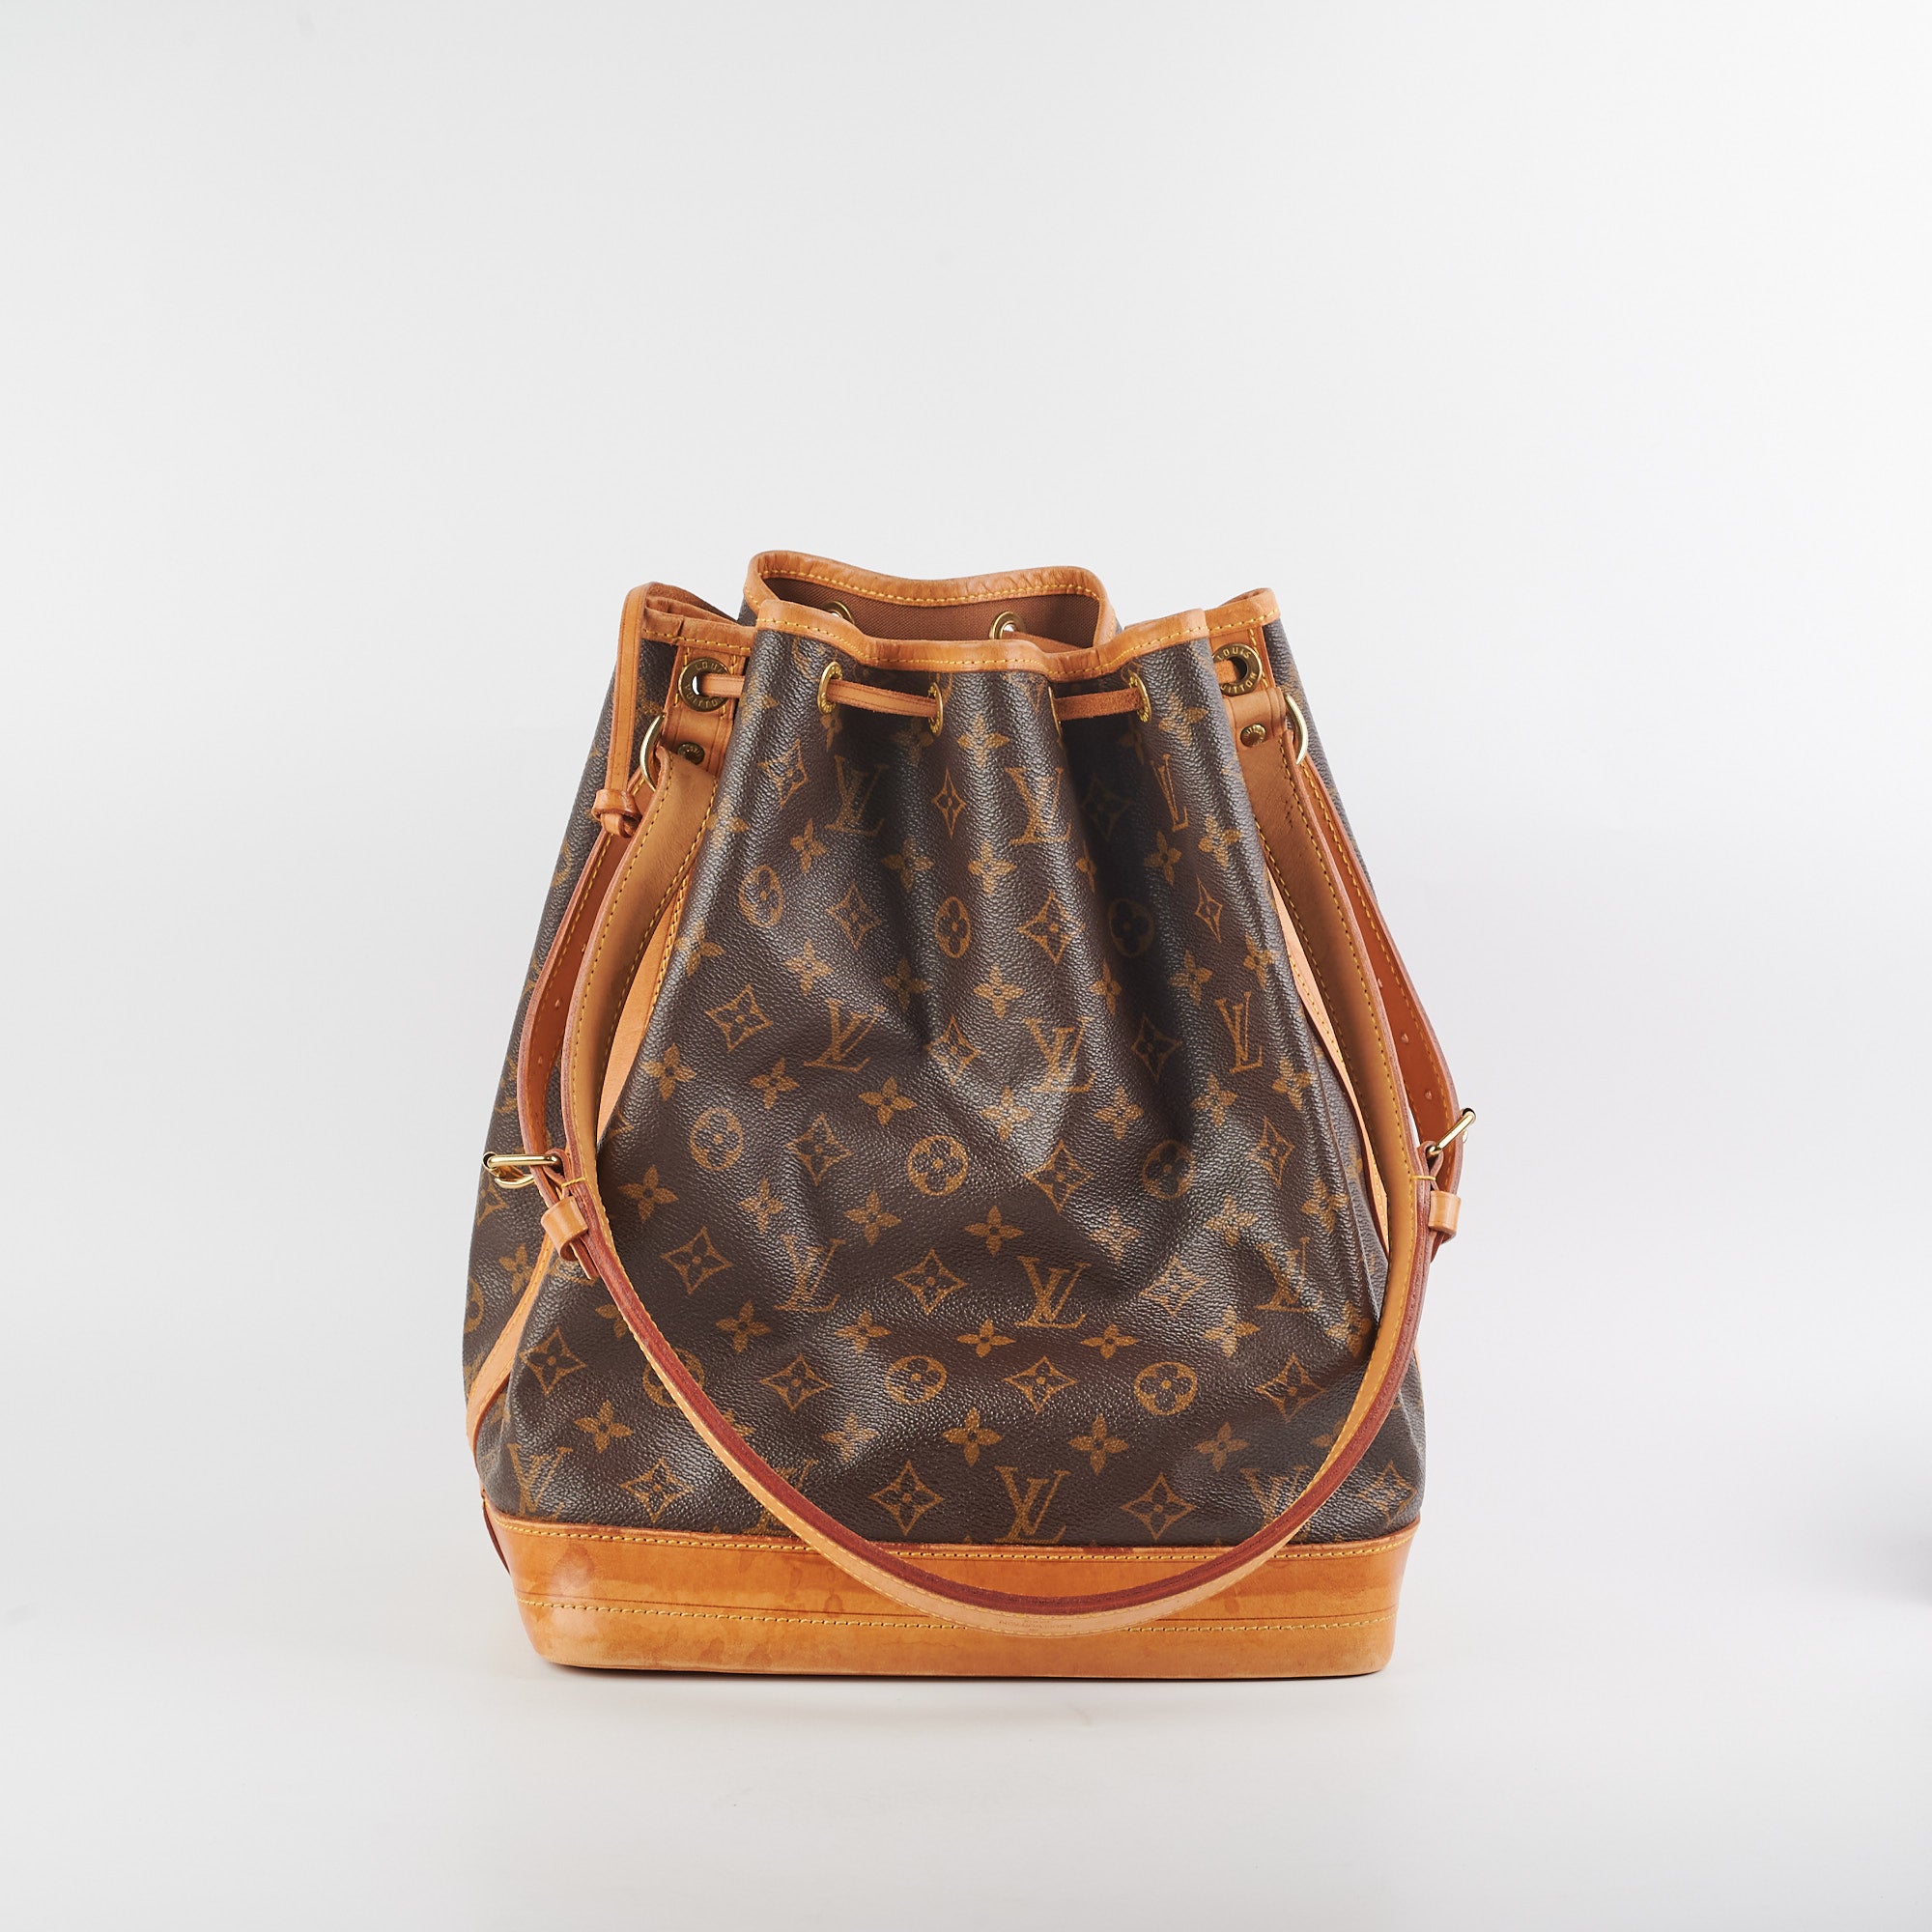 New Vintage x Louis Vuitton Makeup Bag 28 with HandPainted Initial S   Etc